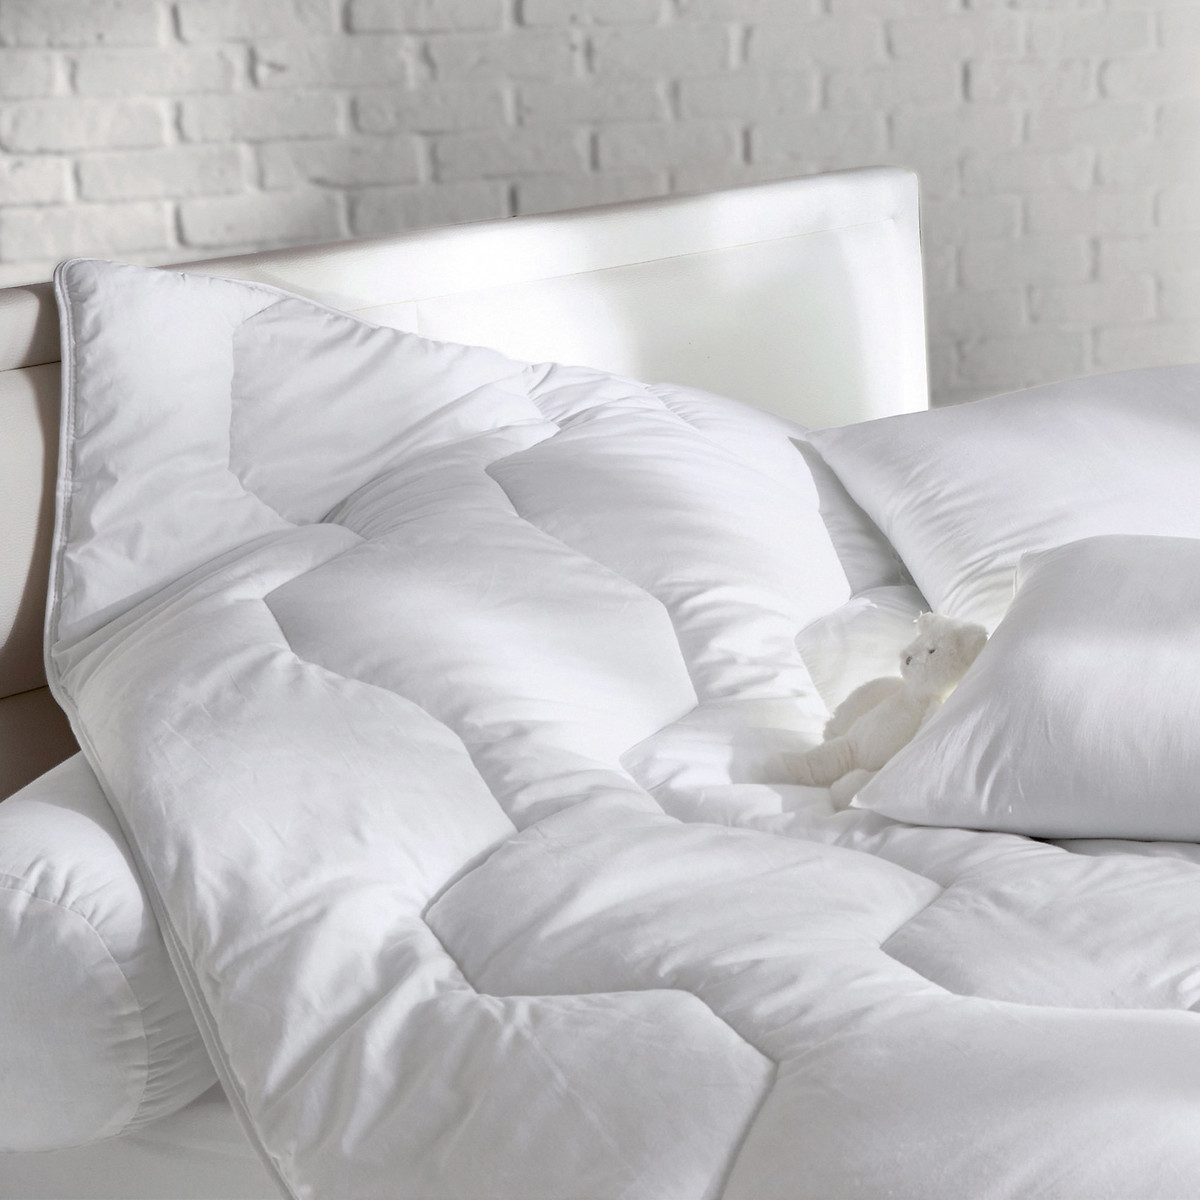 Одеяло LA REDOUTE INTERIEURS Одеяло 4 SAISONS - От комаров 240 x 220 см белый, размер 240 x 220 см - фото 1